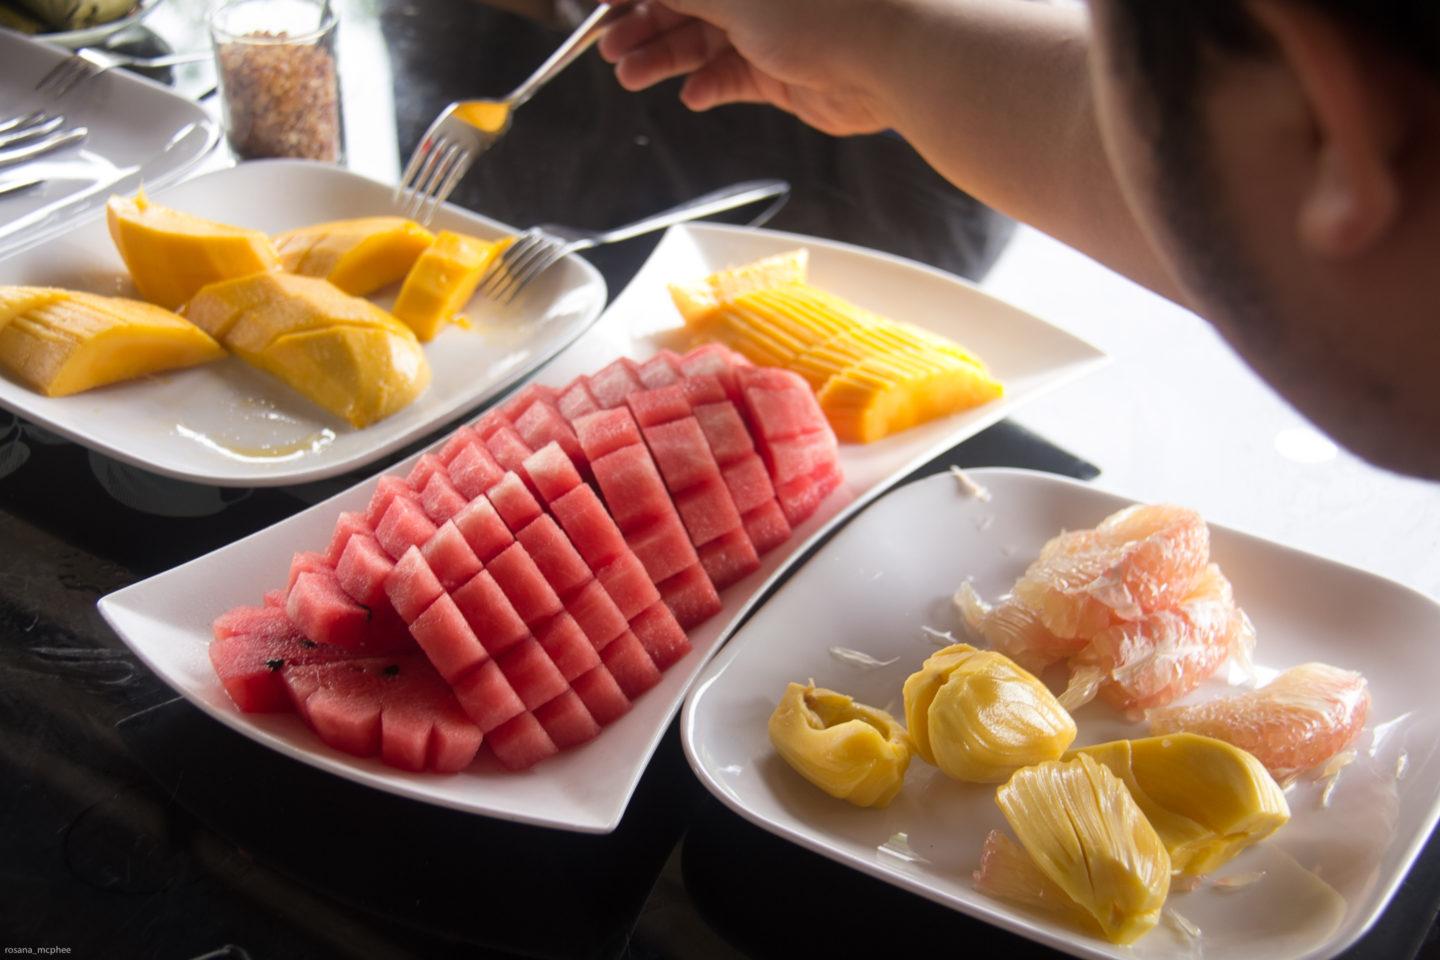 dessert in Thailand is fresh fruits  - mangos, watermelon, papaya, jackfruit and pomelo, a gastronomic experience beyond Bangkok